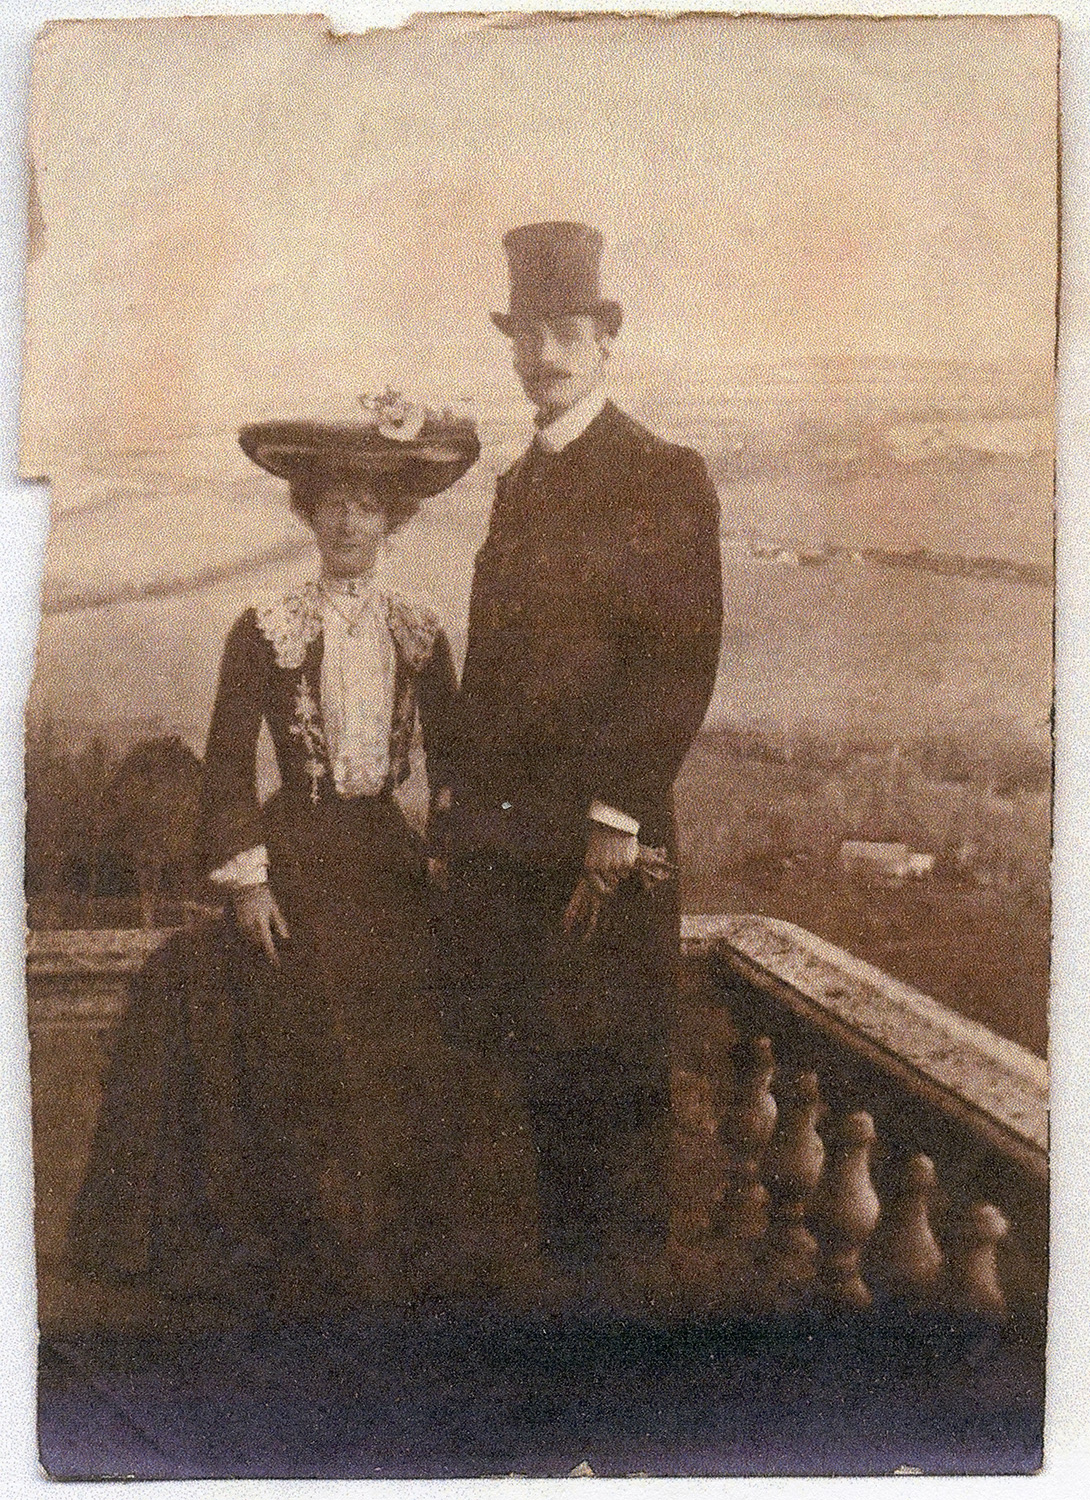 Arthur Lee Glover and his wife Edith Ethel Glover on their Honeymoon, on the balcony at Axnfell, August 1903